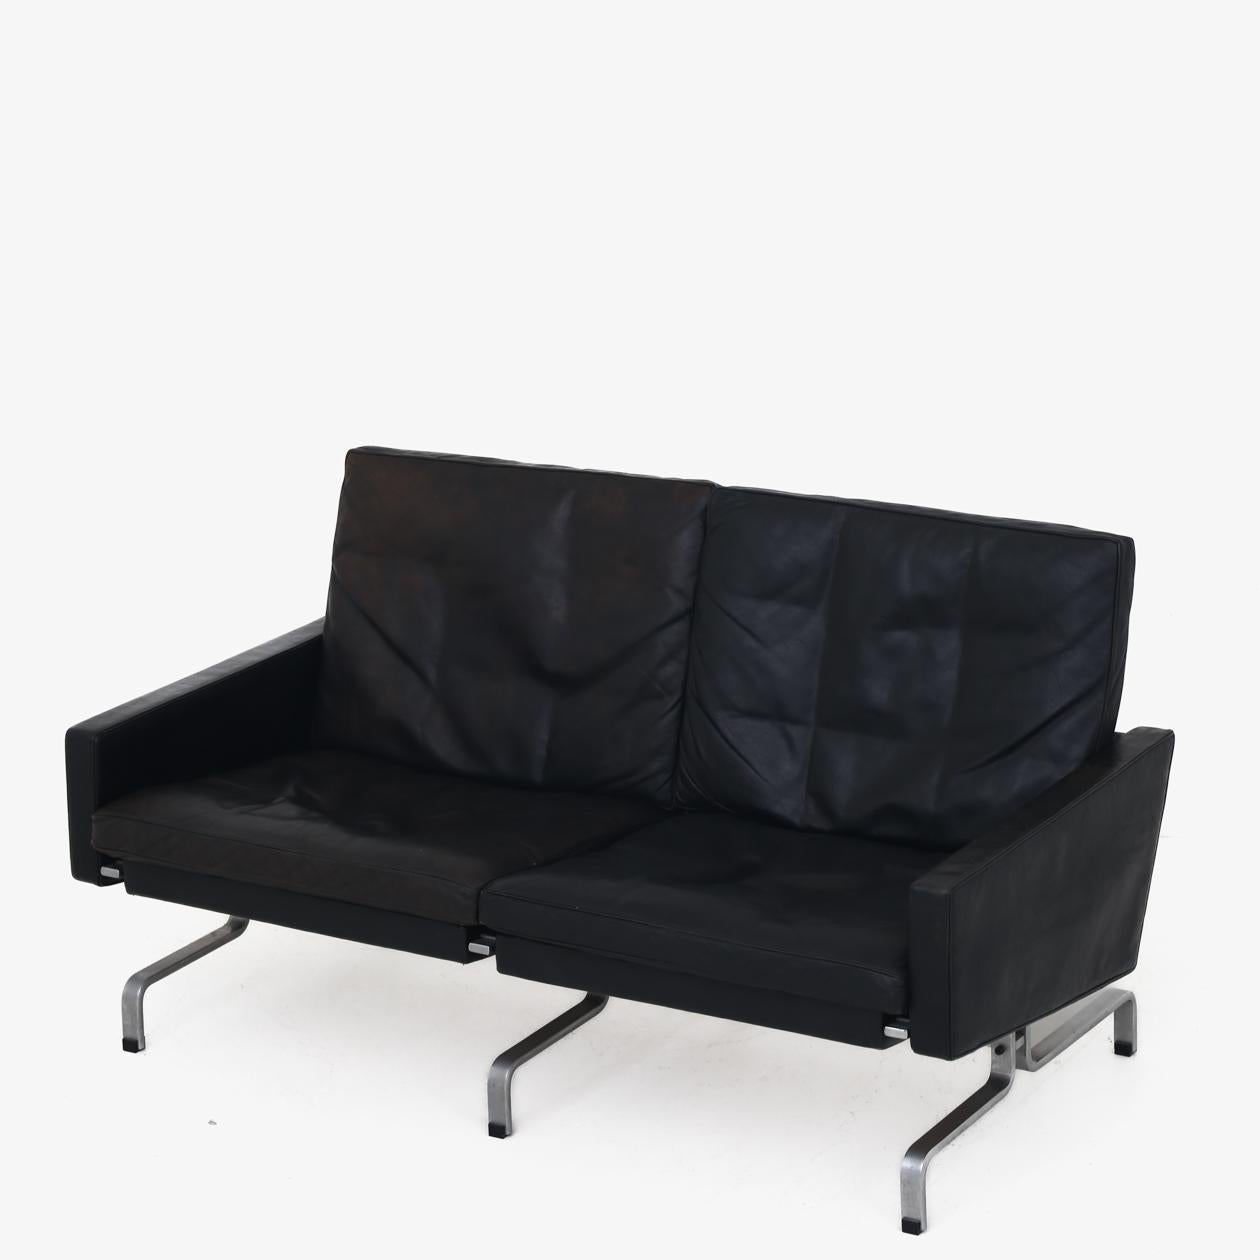 PK 31/2 - 2 seater sofa in black patinated leather with chromed steel frame. Poul Kjærholm / E. Kold Christensen.